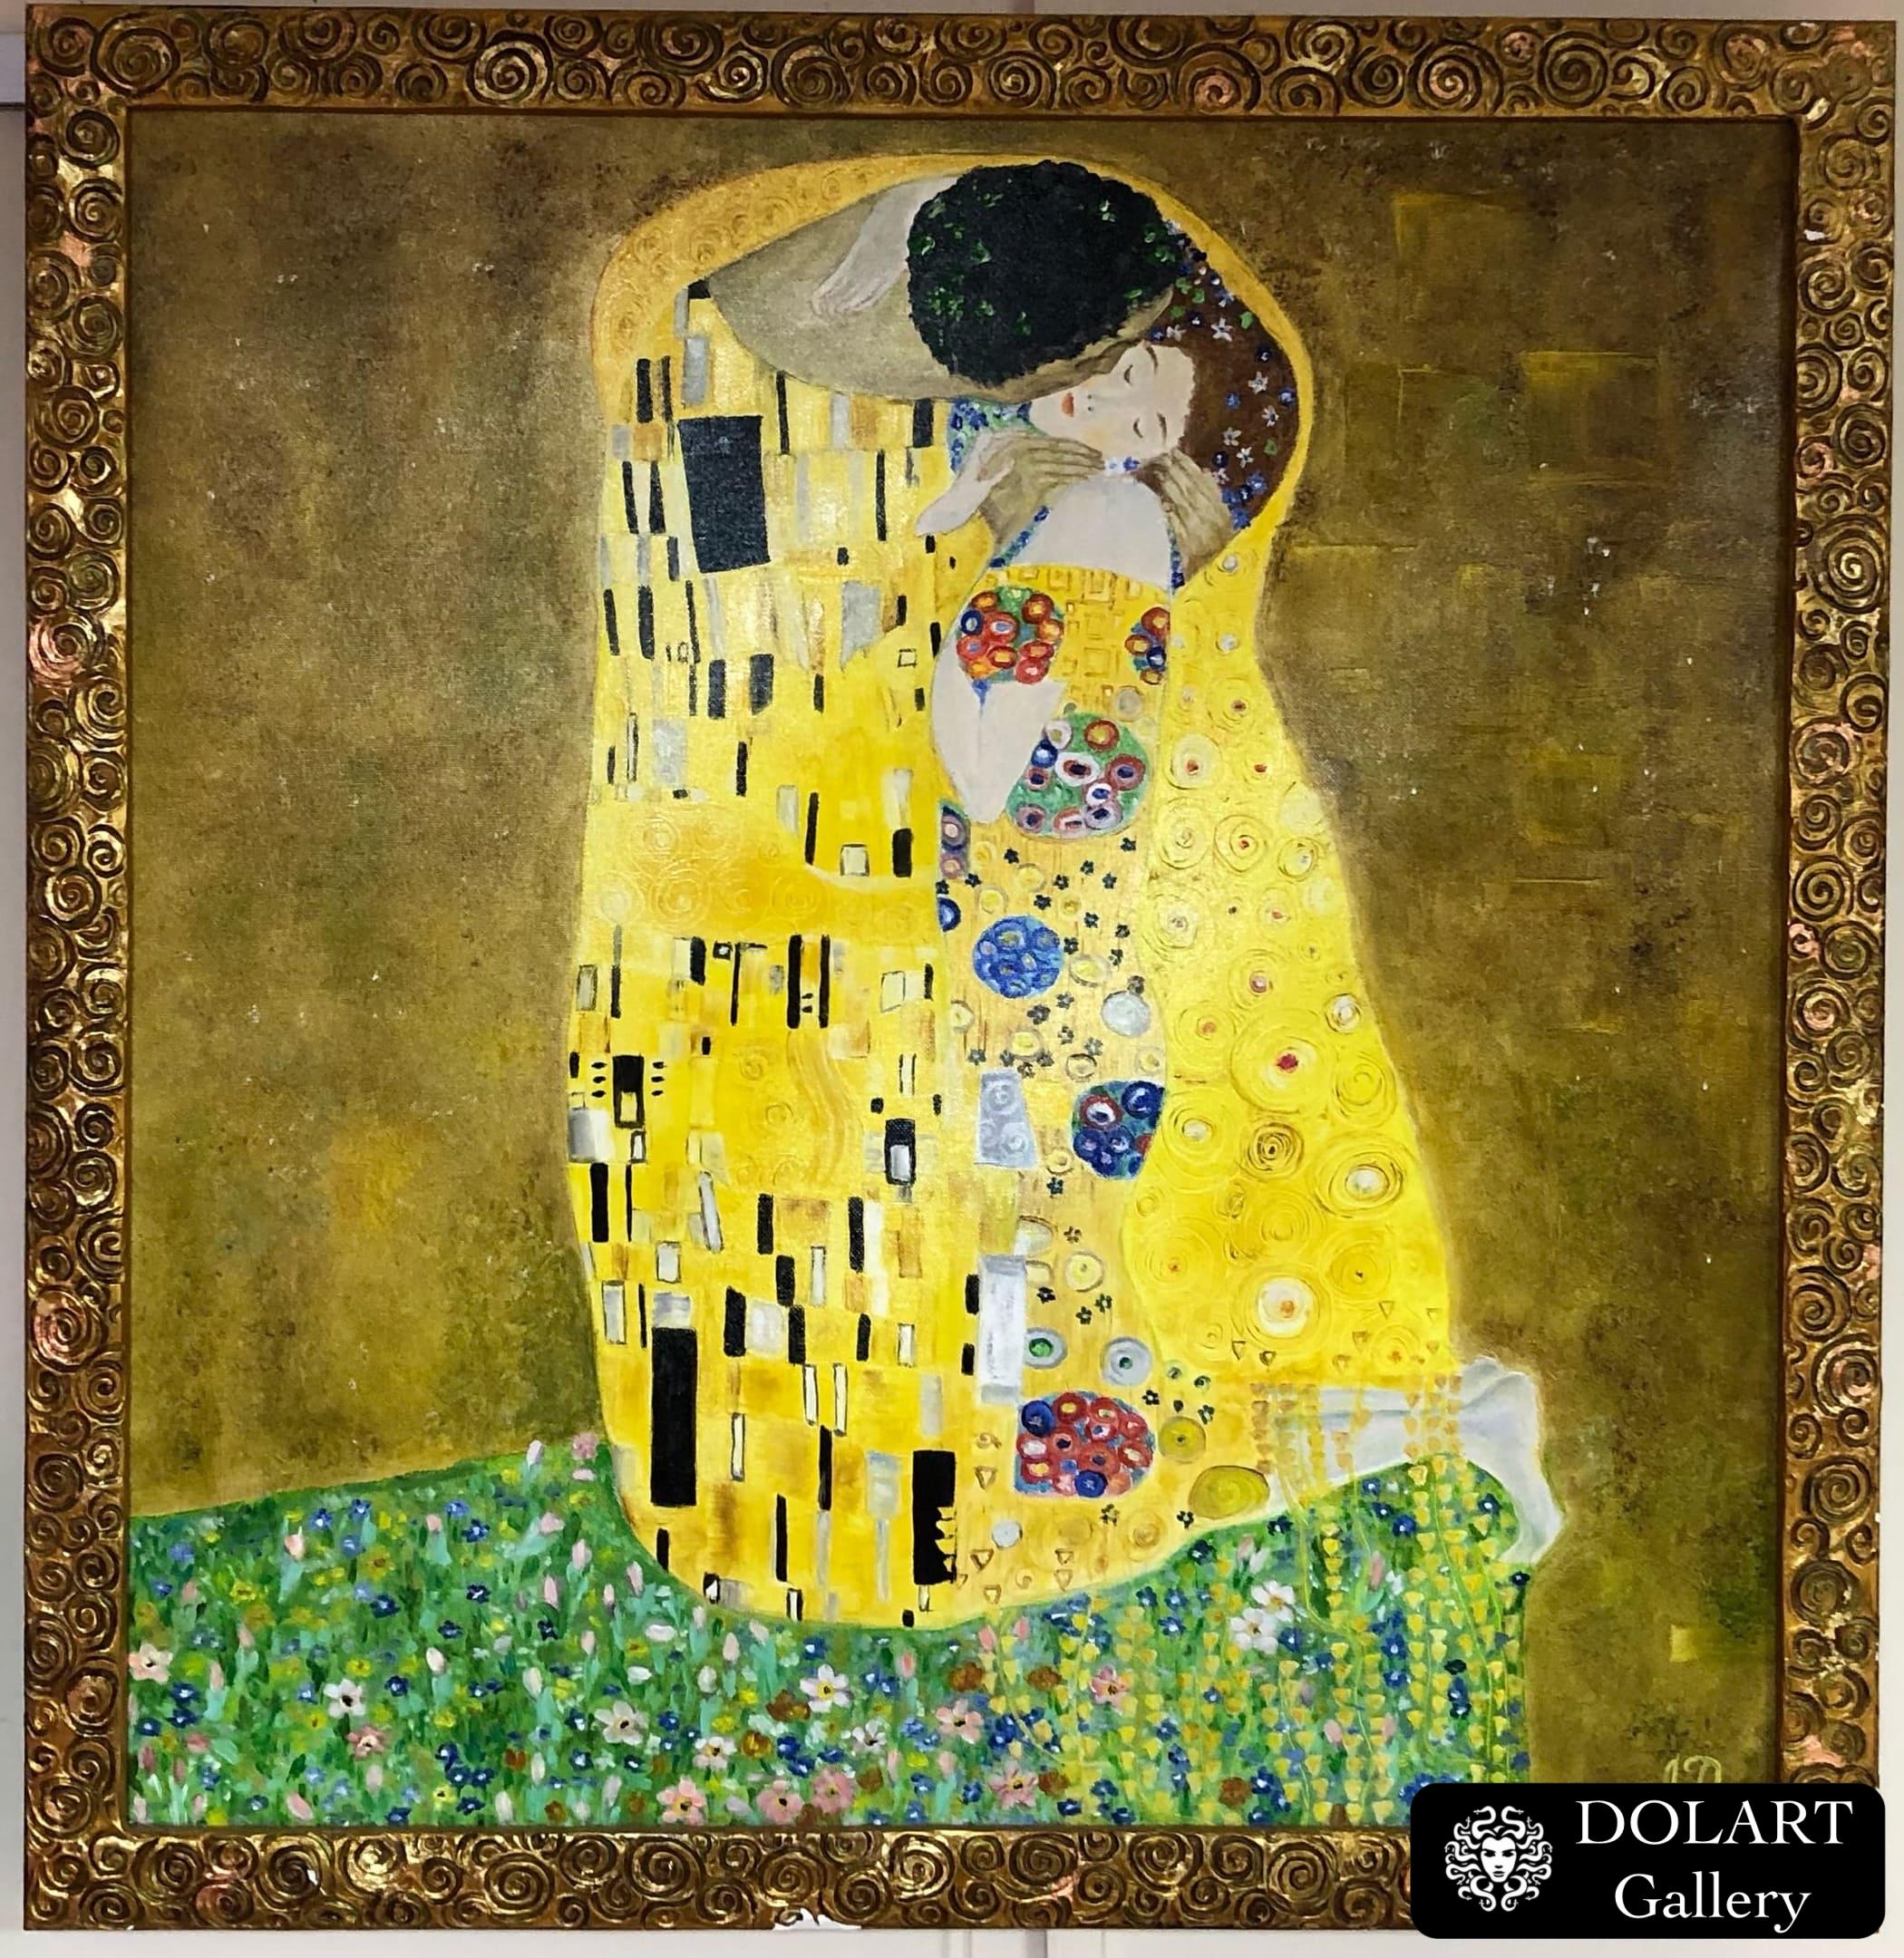 “The Kiss” by Gustav Klimt